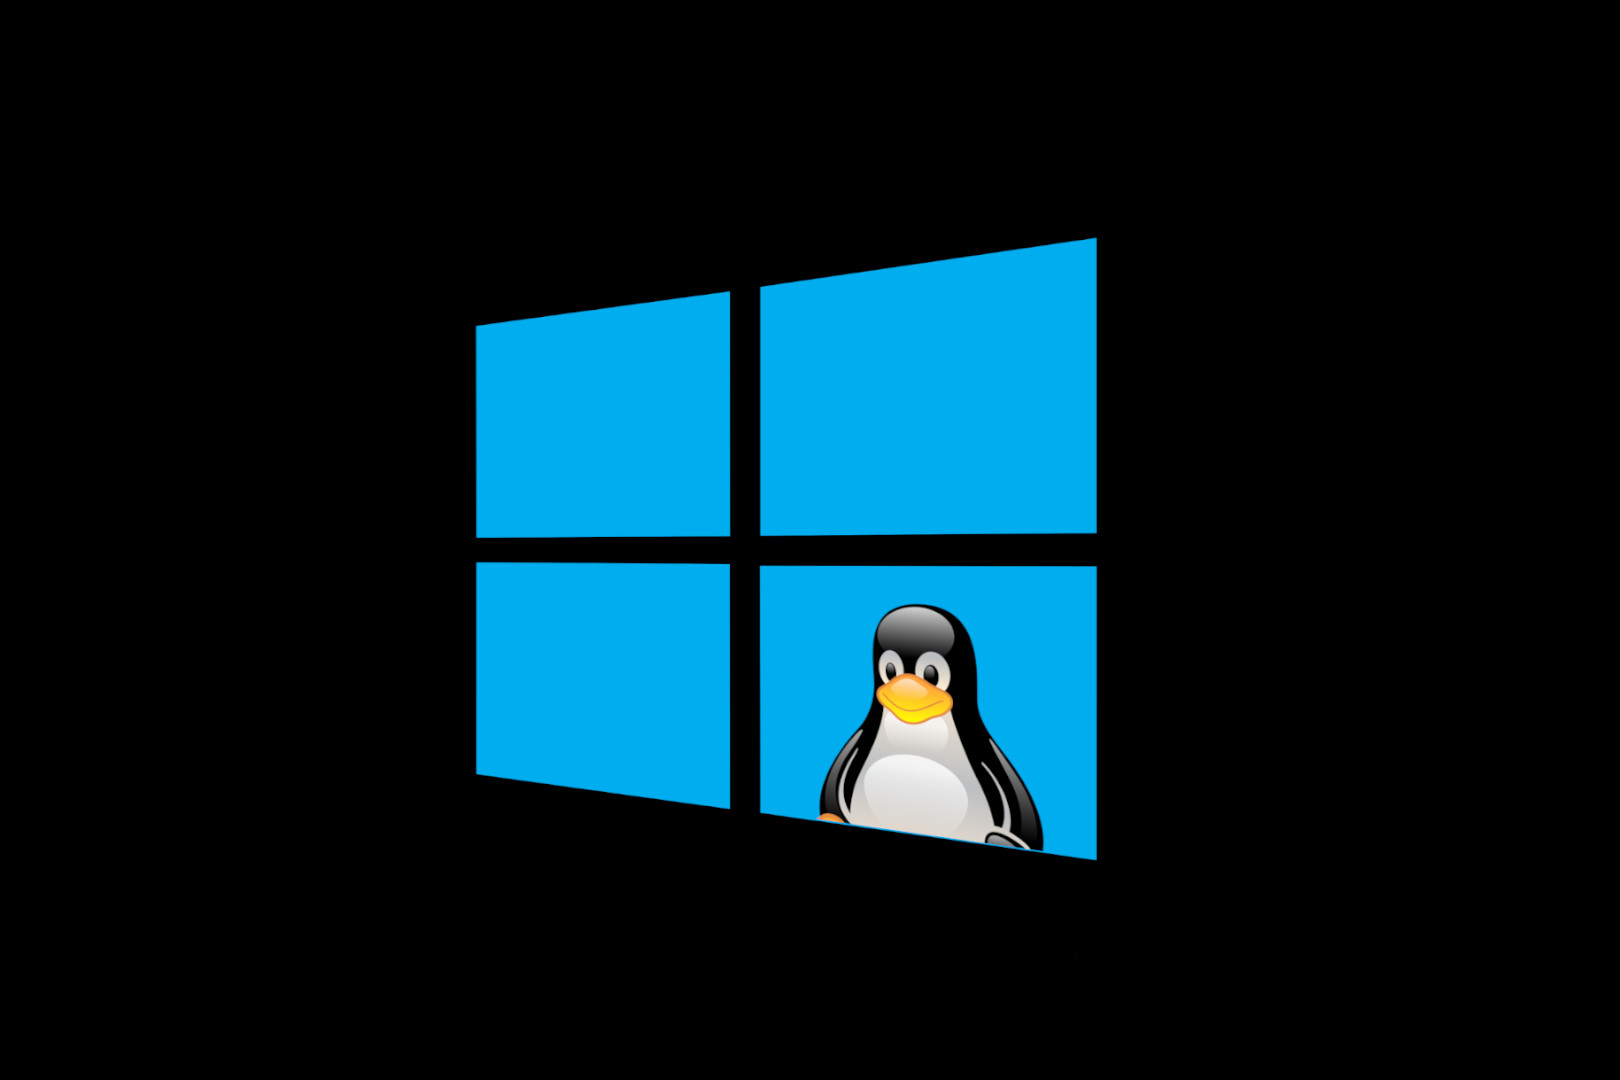 Manfaat Install Linux Dual Boot Windows